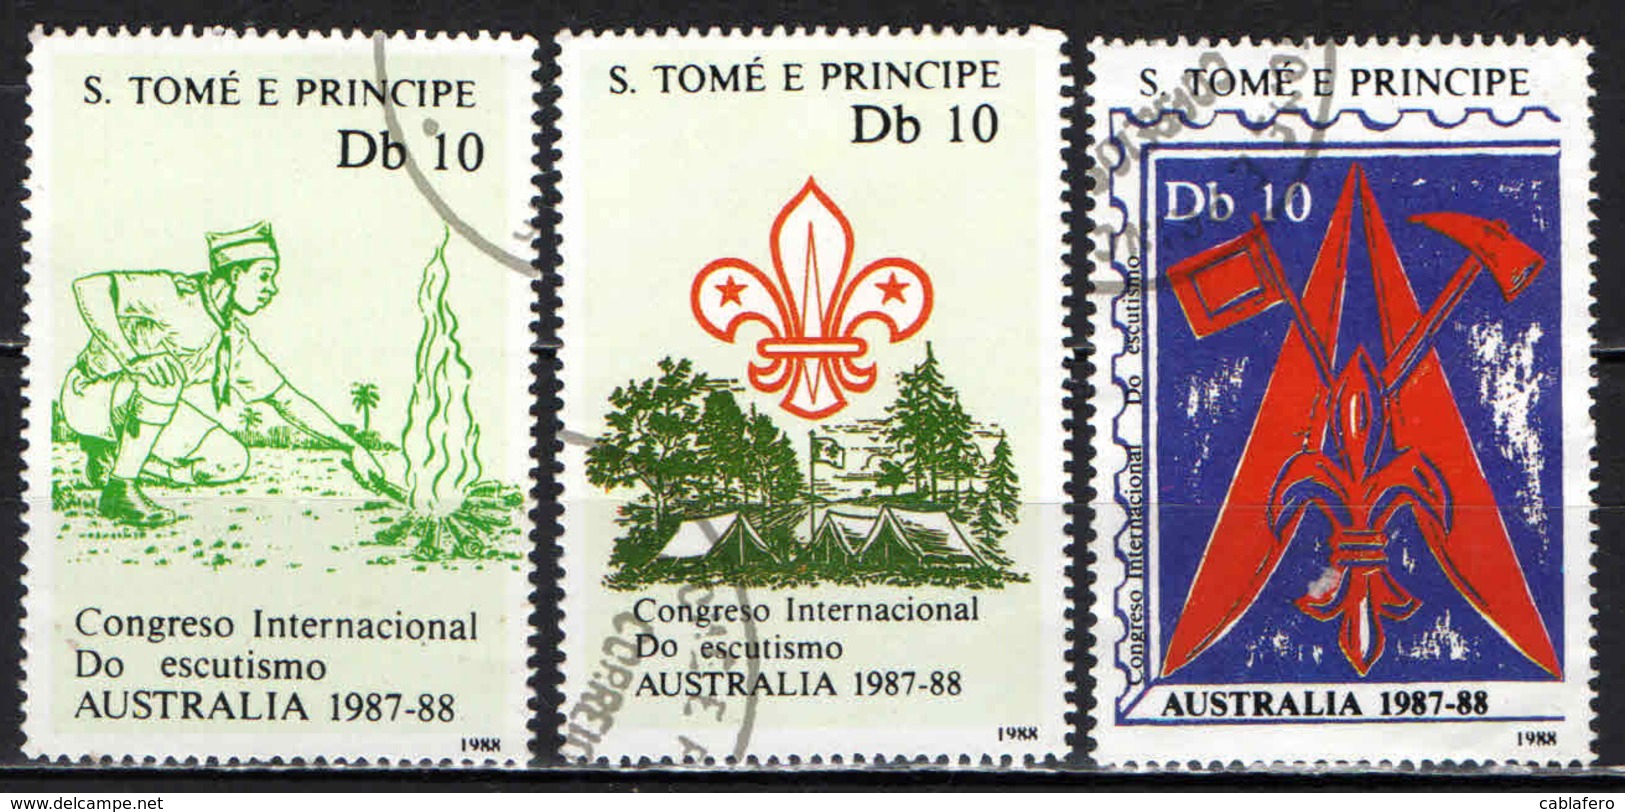 S. TOME' E PRINCIPE - 1988 - Intl. Boy Scout Jamboree, Australia - USATI - St. Thomas & Prince